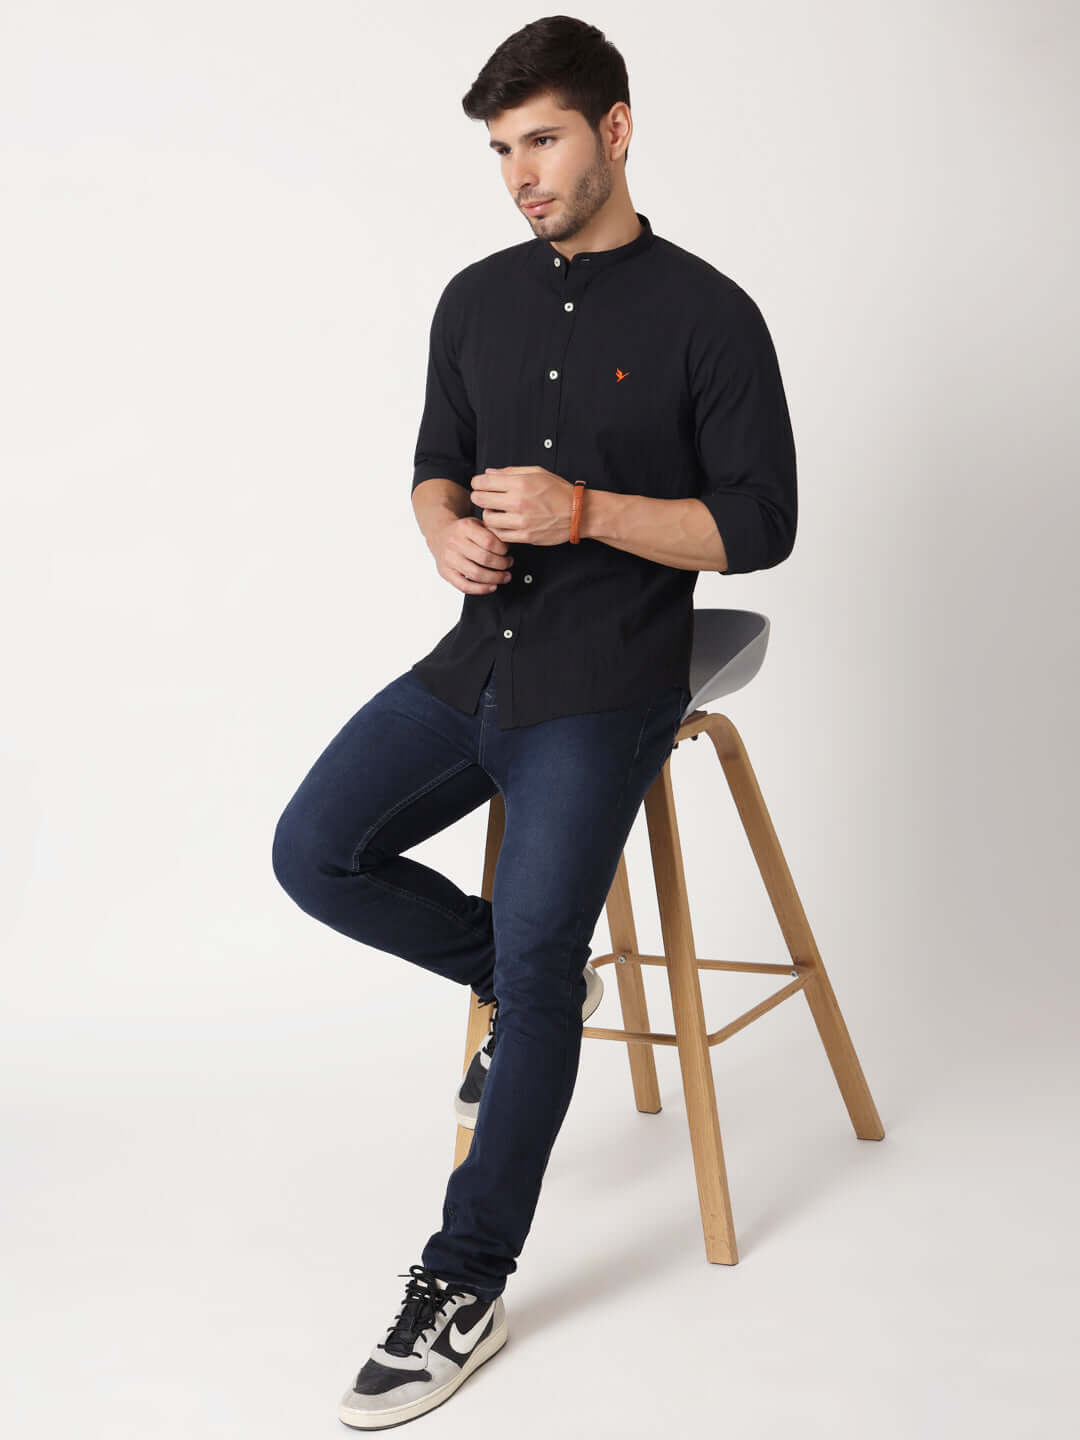 Amswan Premium Men's Black Crinkle Cotton Shirt - Mandarin Collar, Long Sleeves